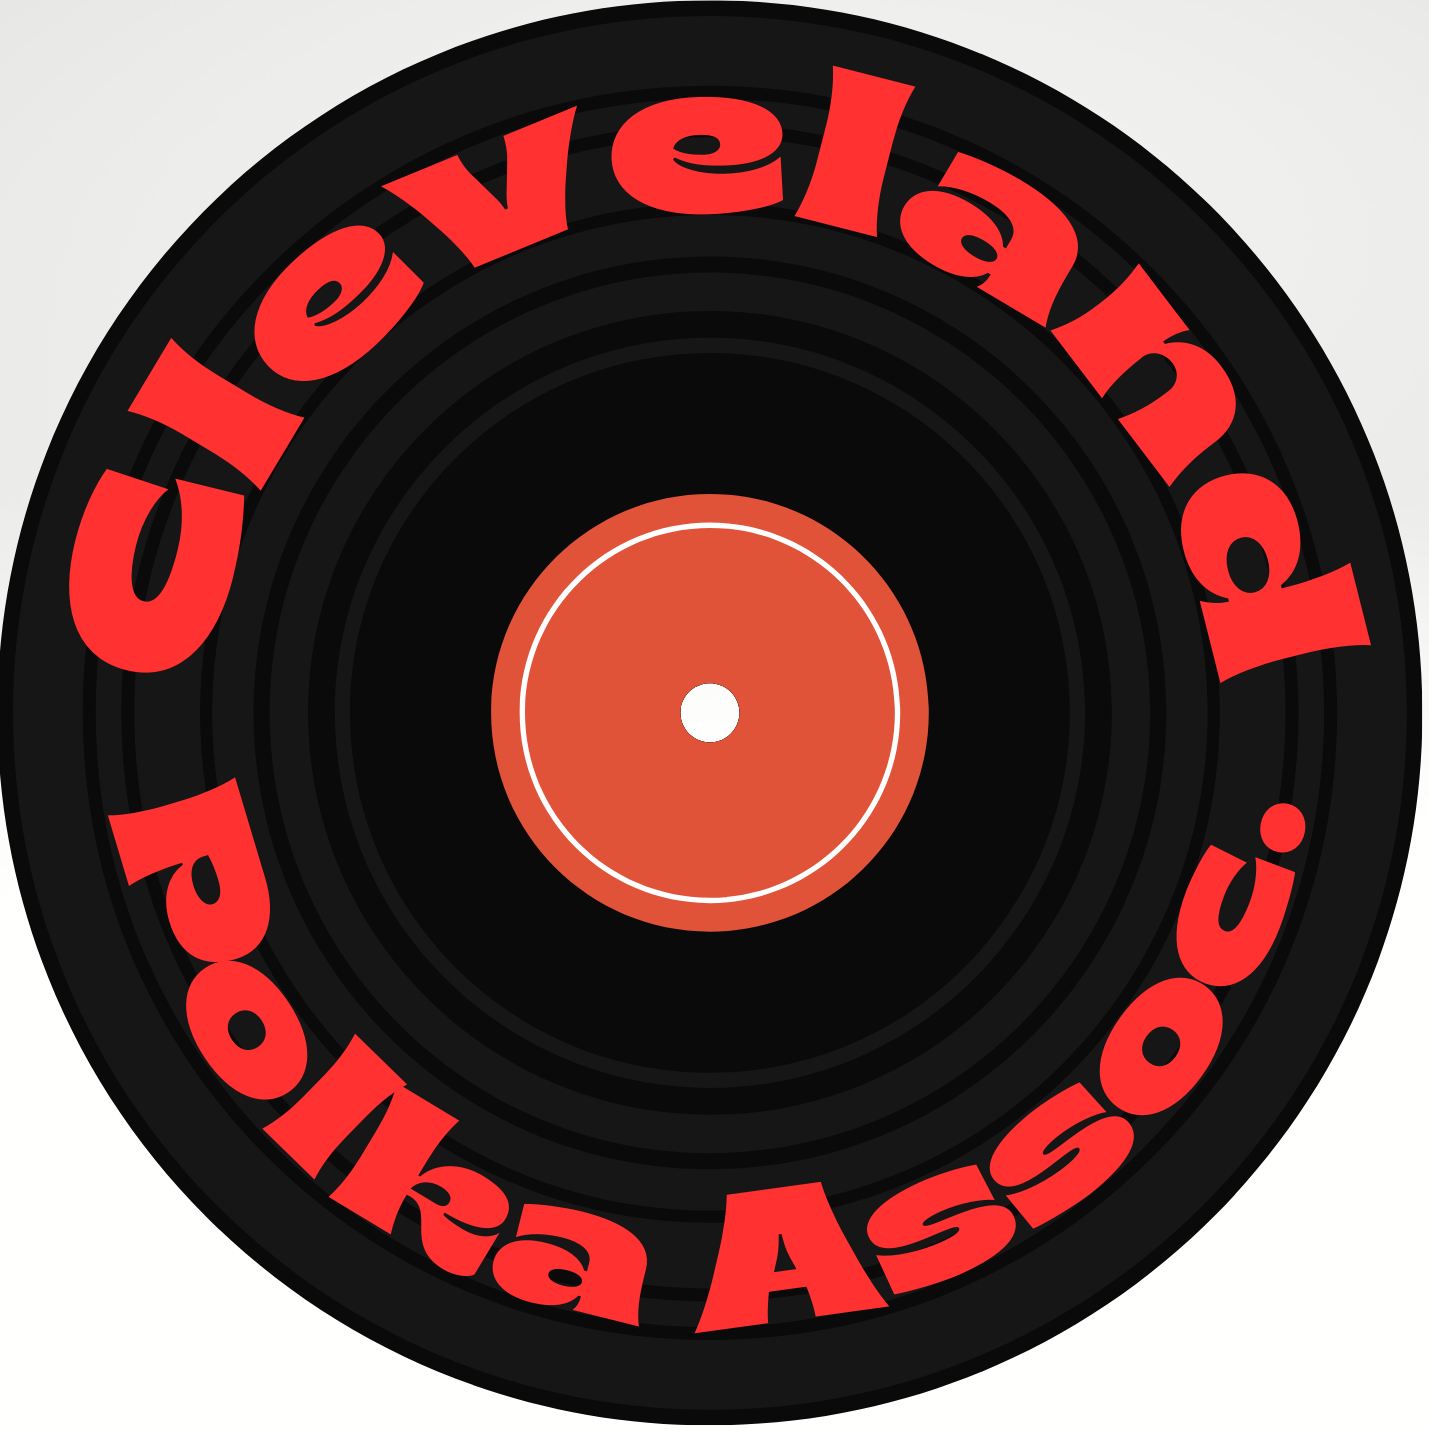 Cleveland Polka Association